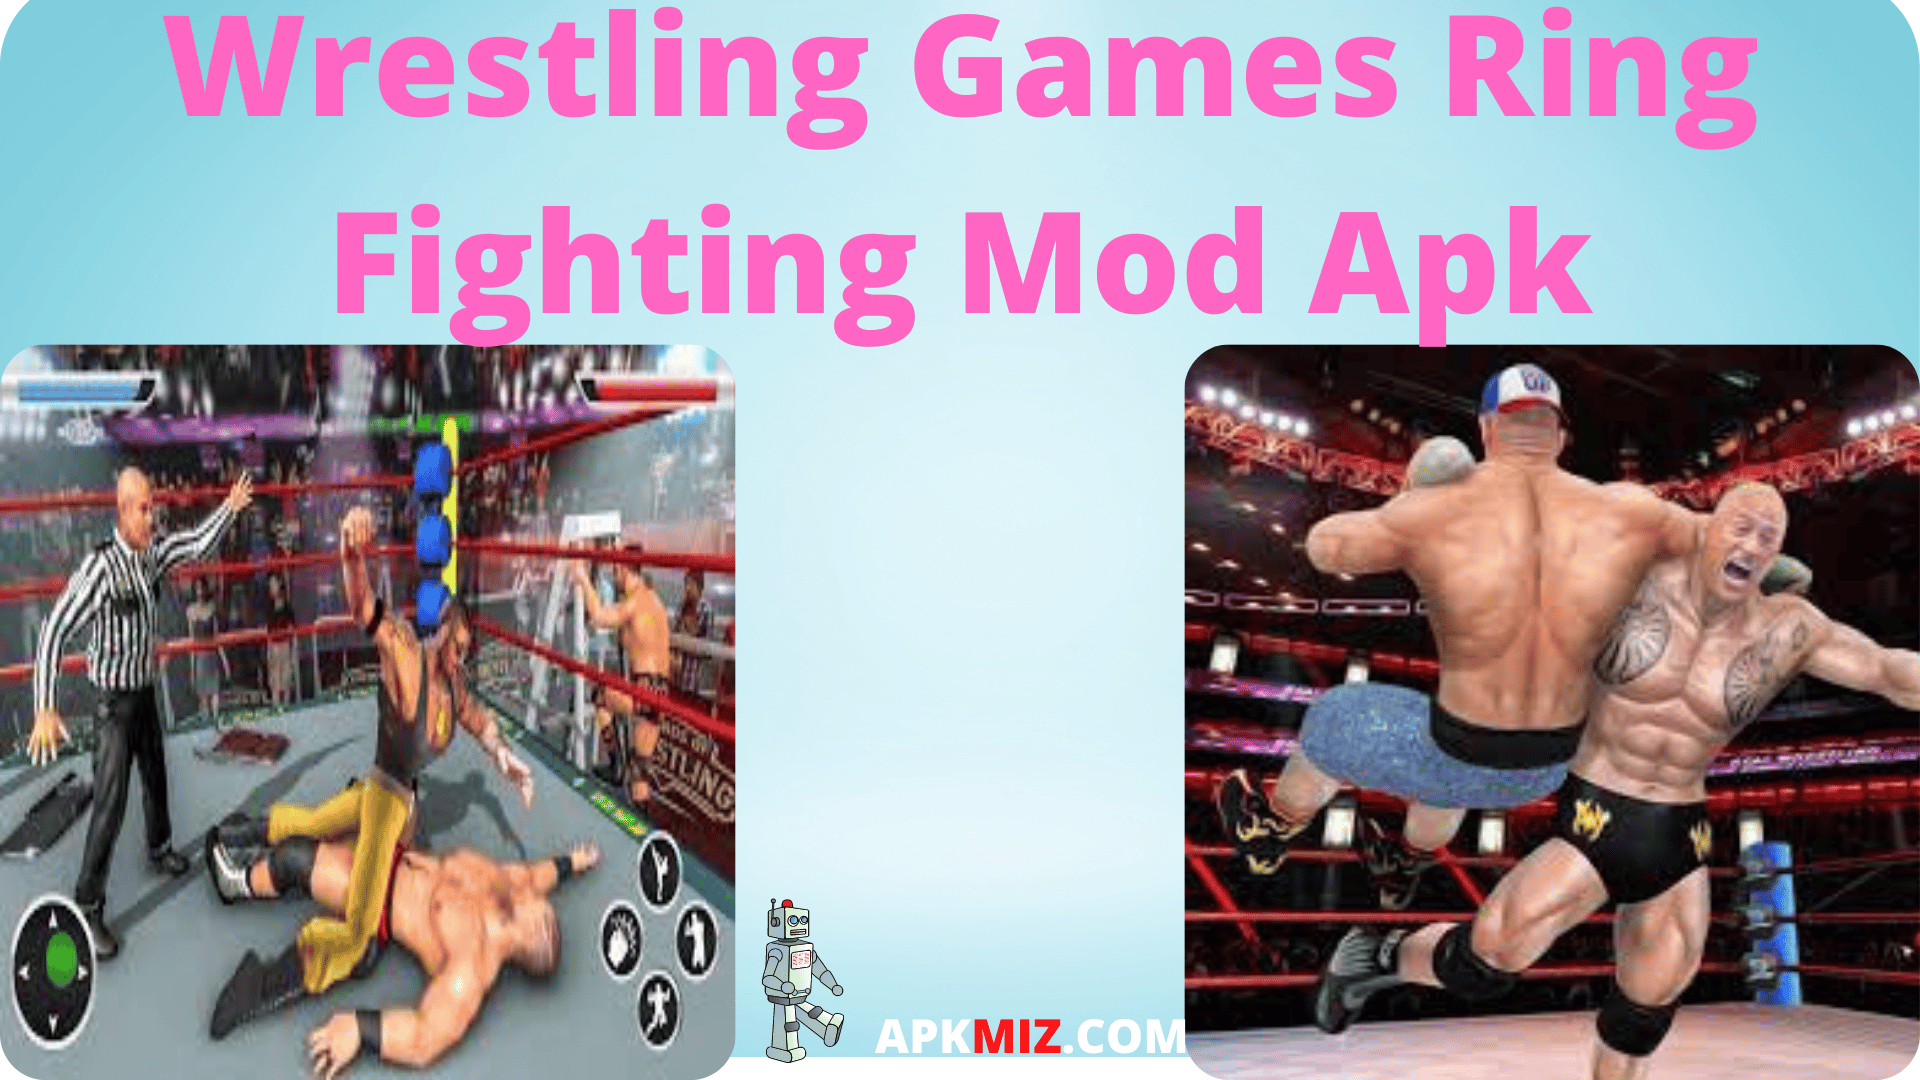 Wrestling Games Ring Fighting Mod Apk